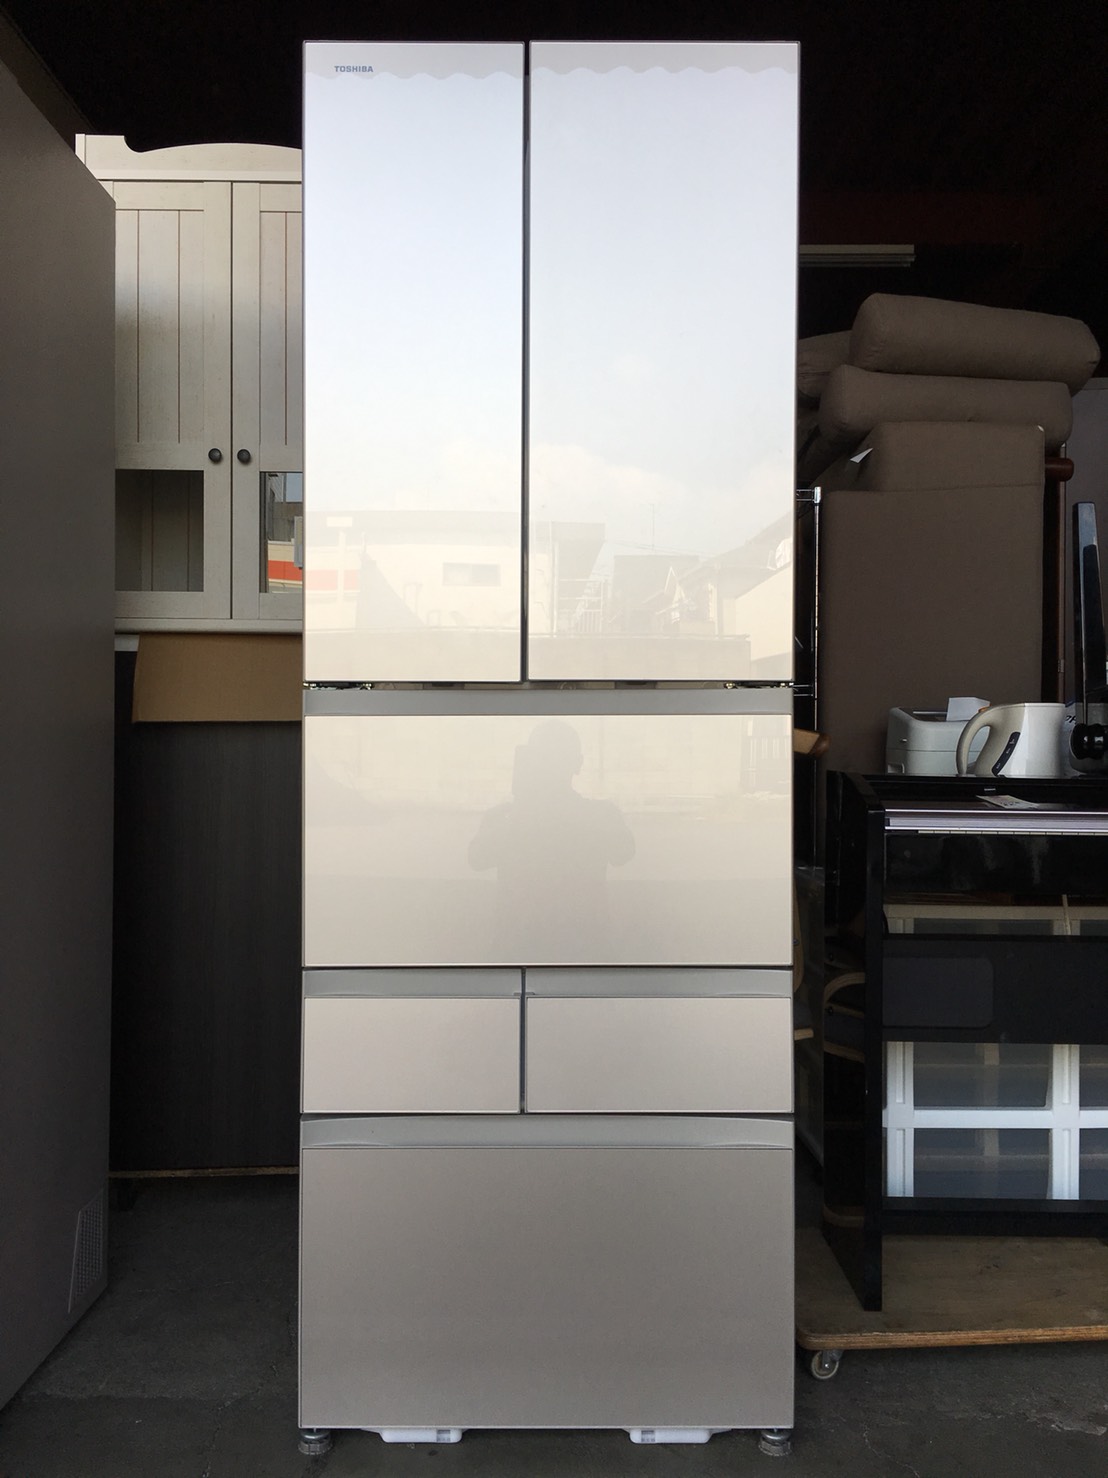 東芝製の冷蔵庫（GR-K460FD）